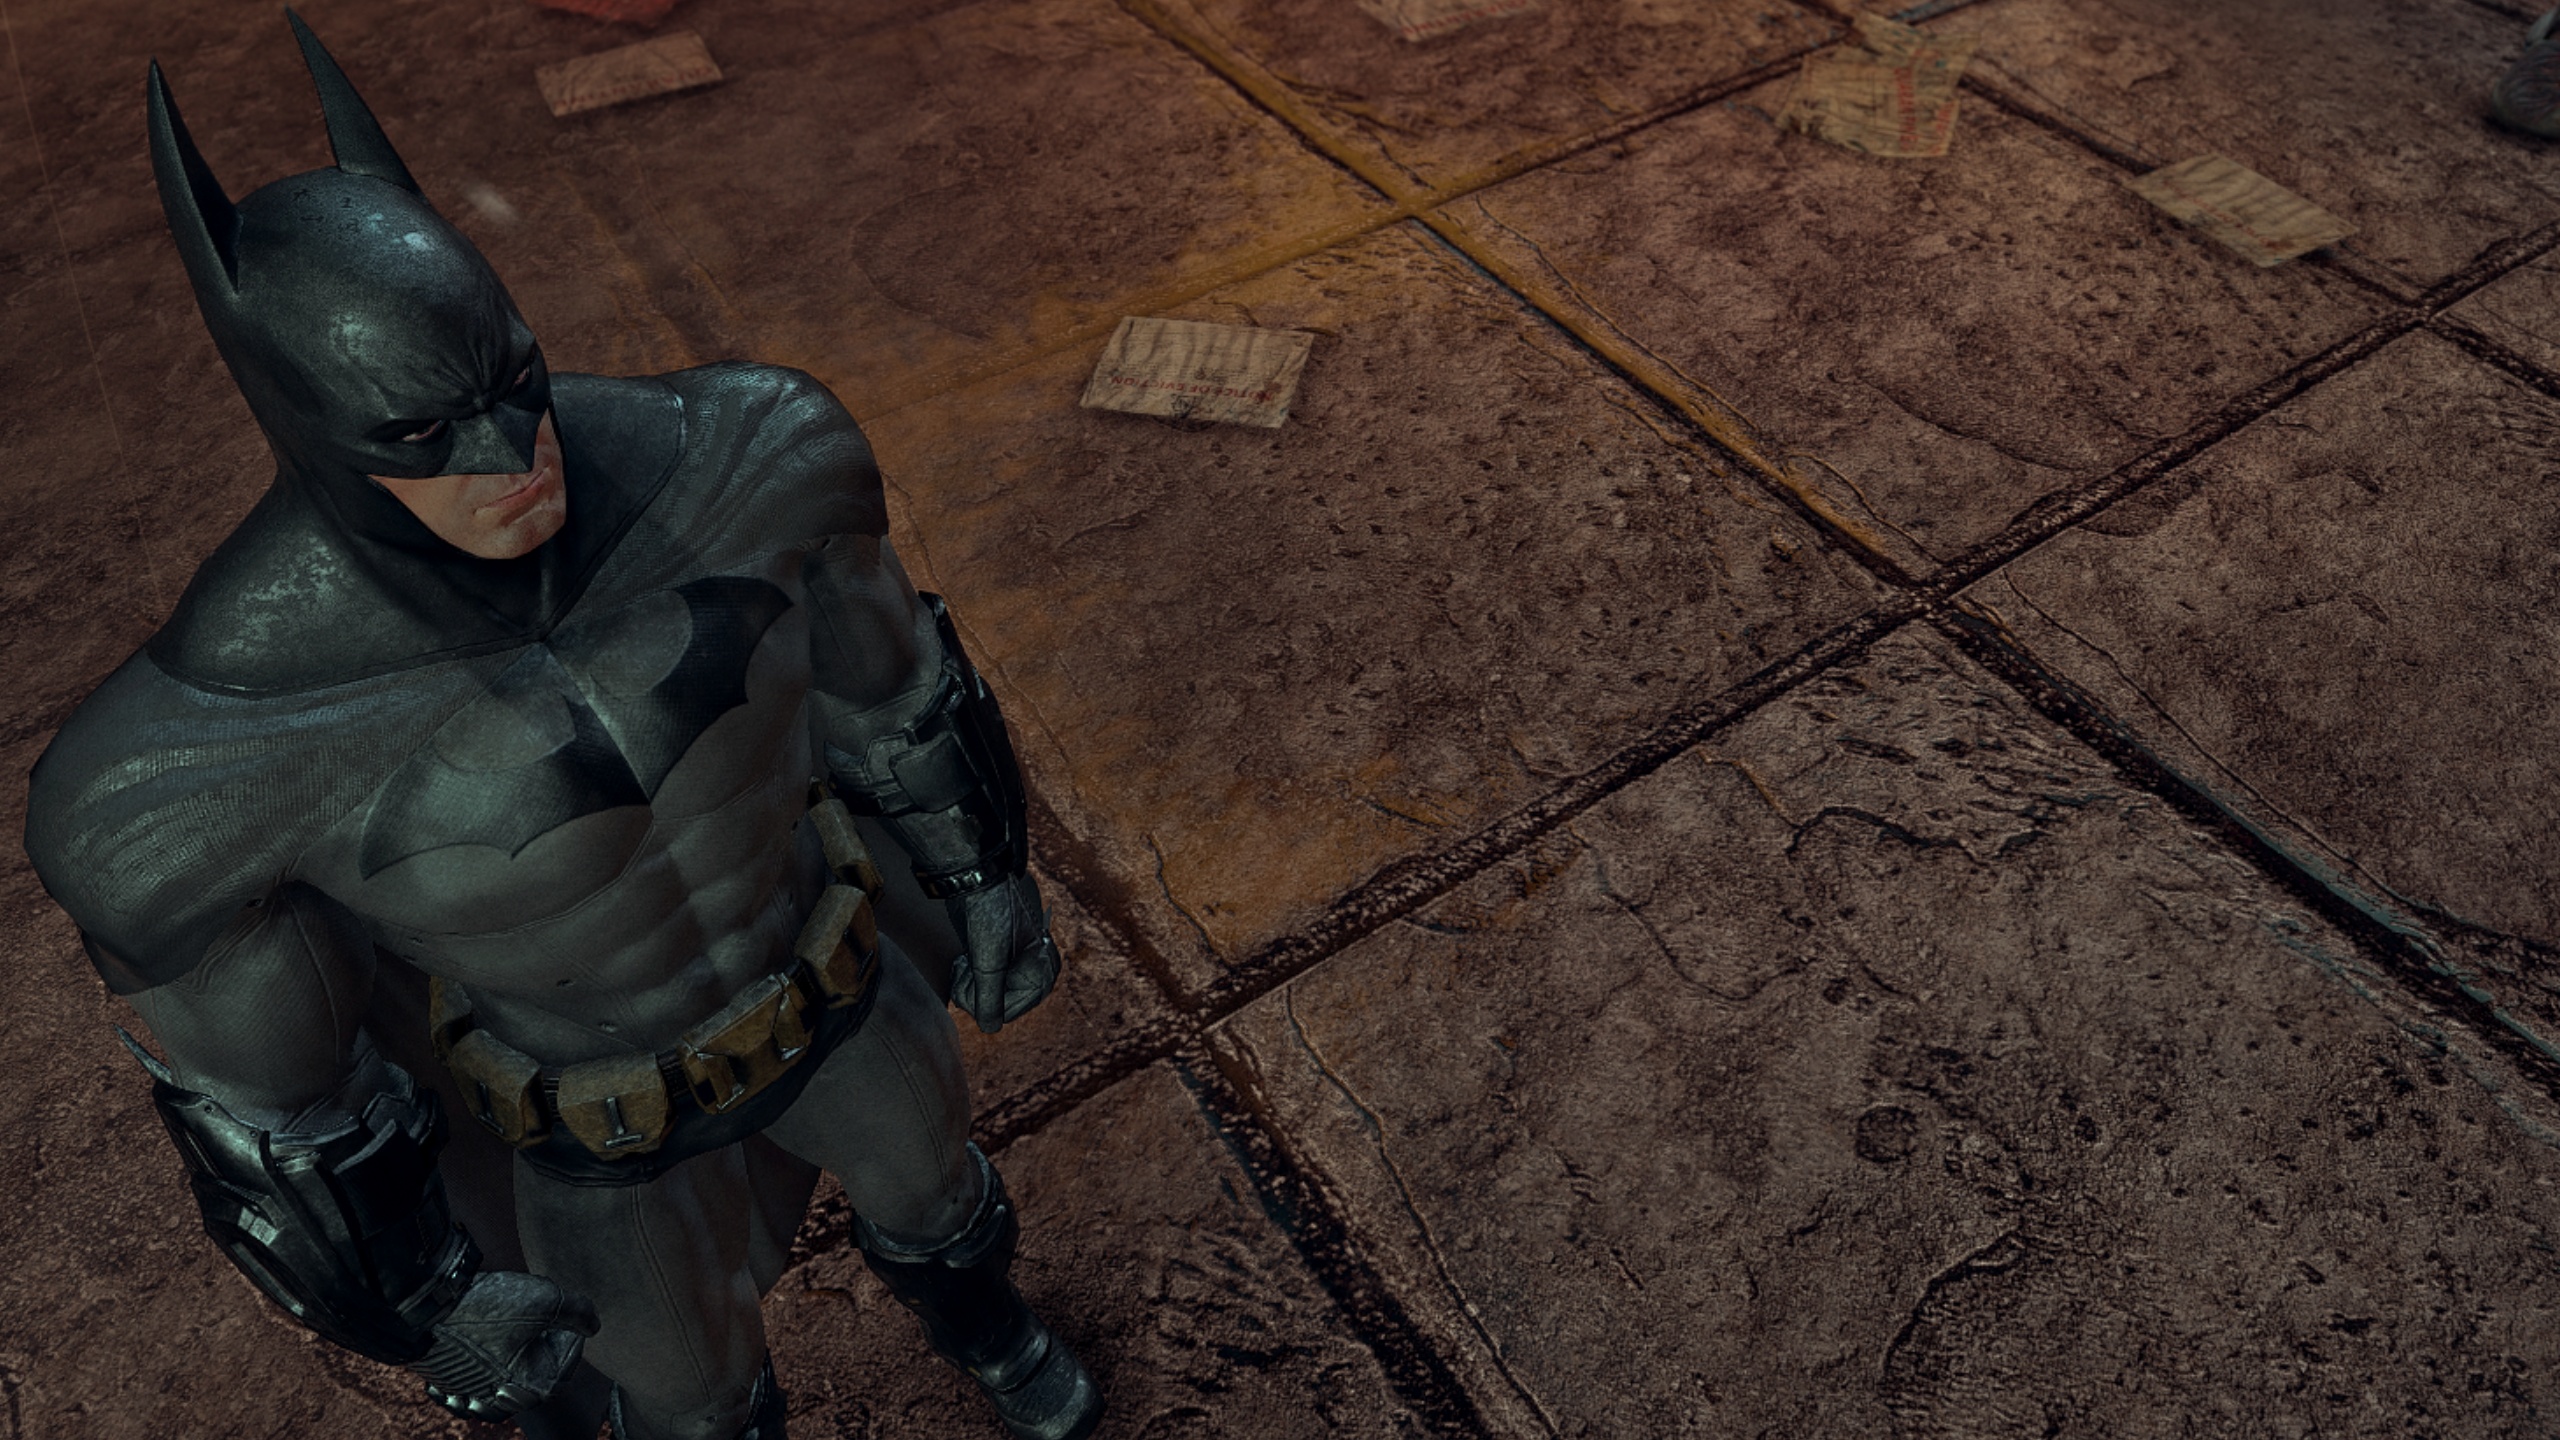 mods for batman arkham city